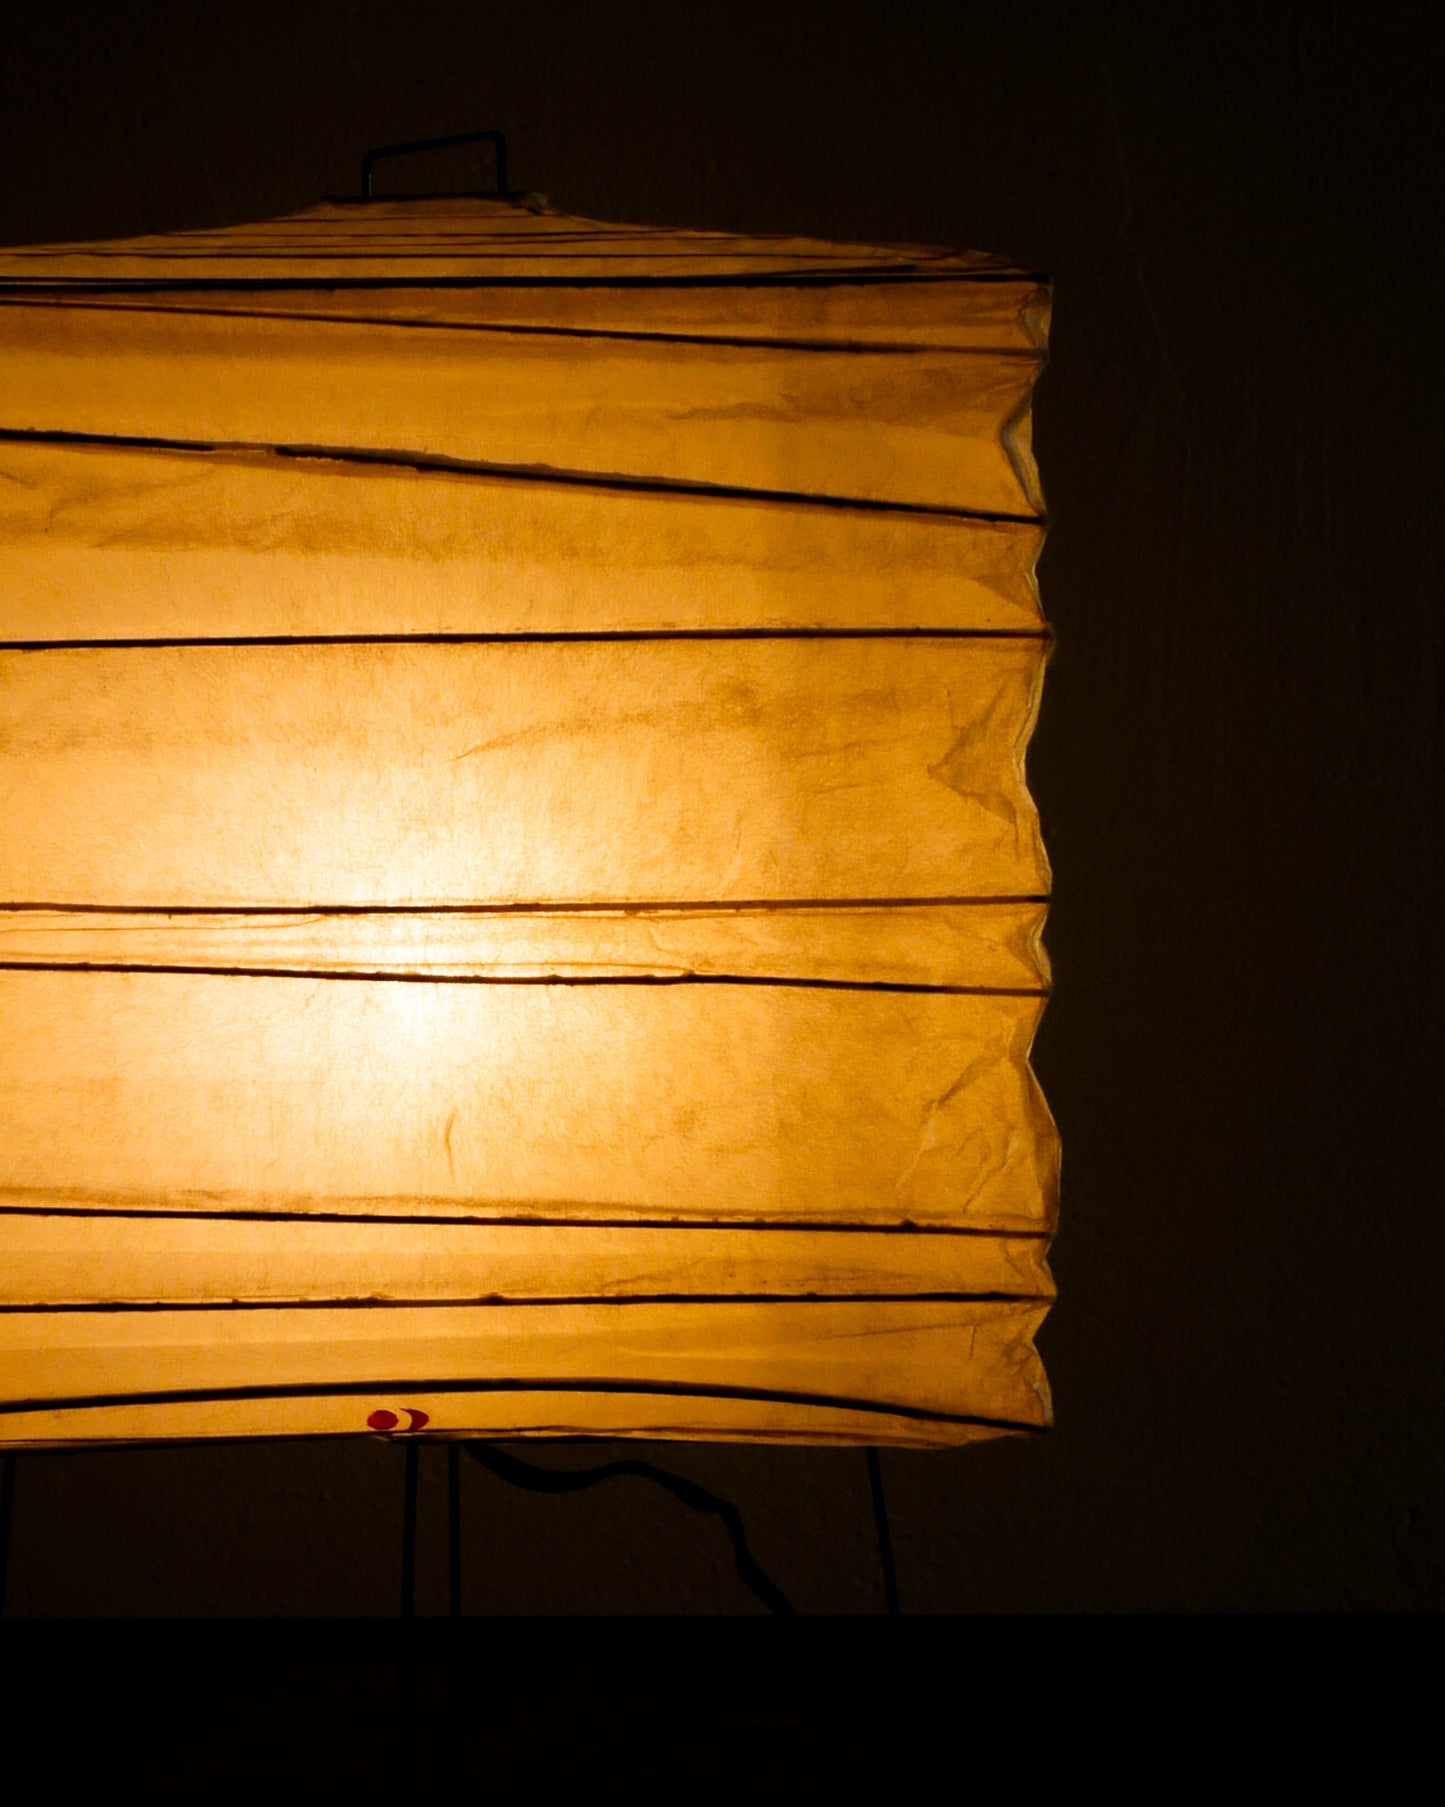 ISAMU NOGUCHI "3X" TABLE LAMP, 1950s